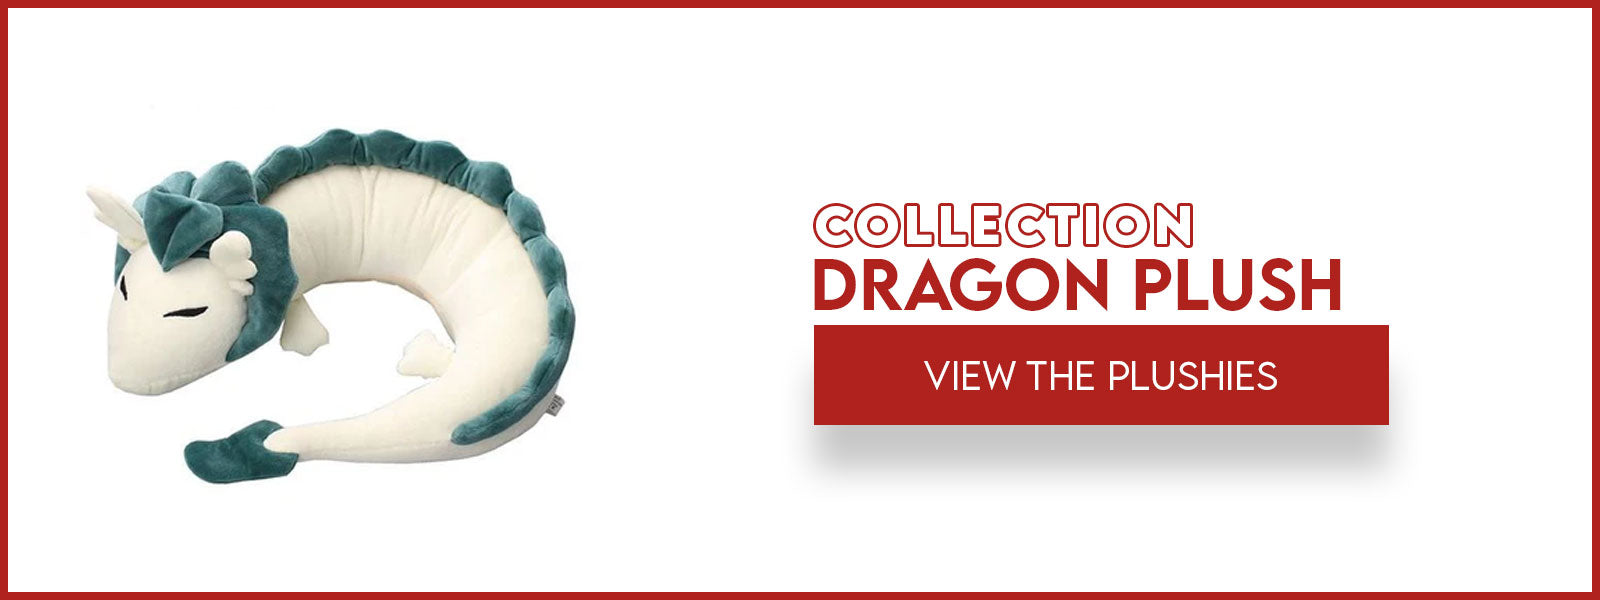 Collections Dragon Plush